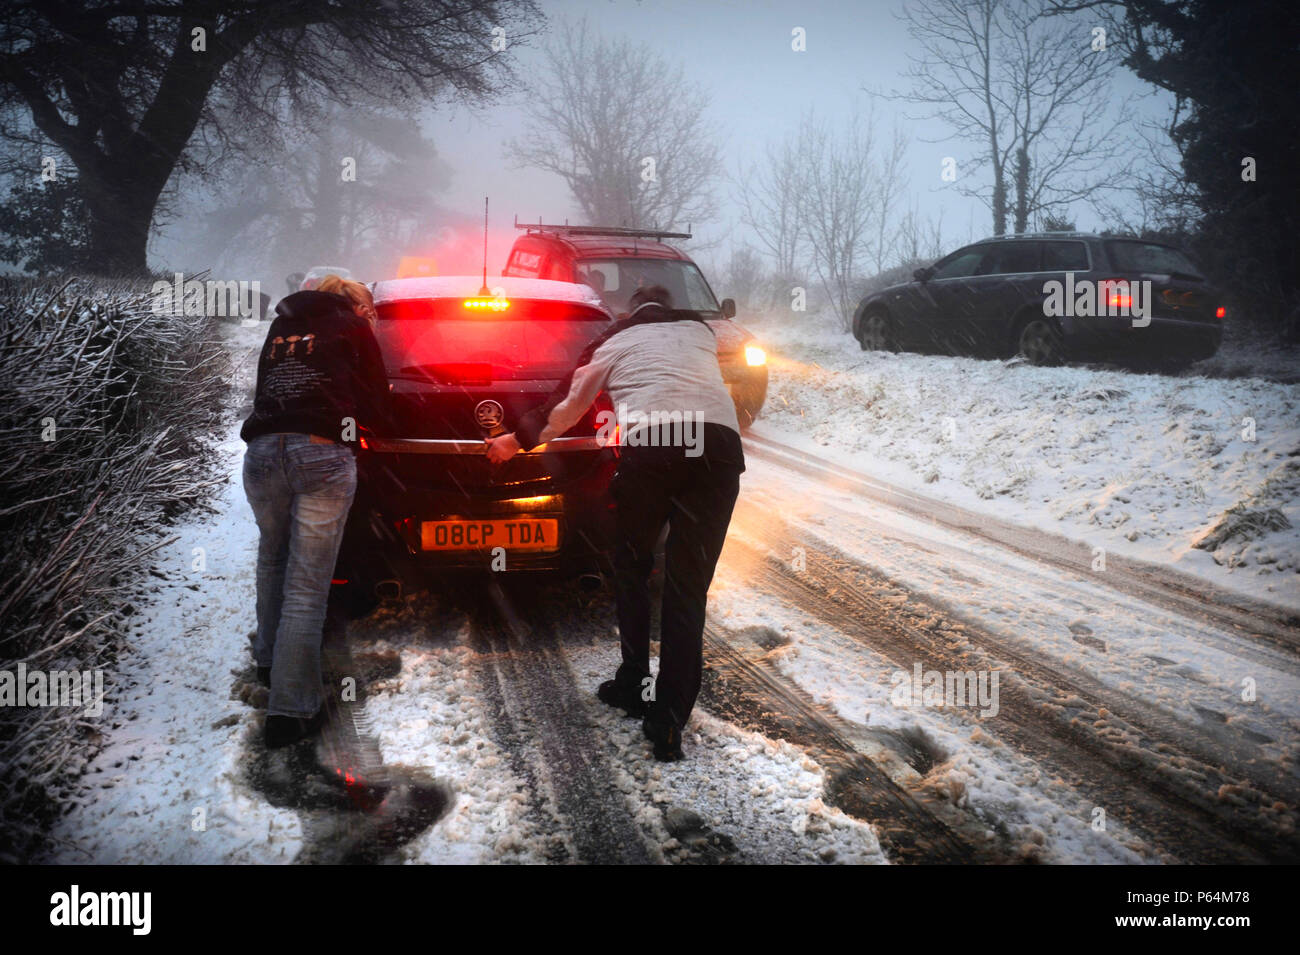 People pushing car stuck on snowy road, UK Stock Photo